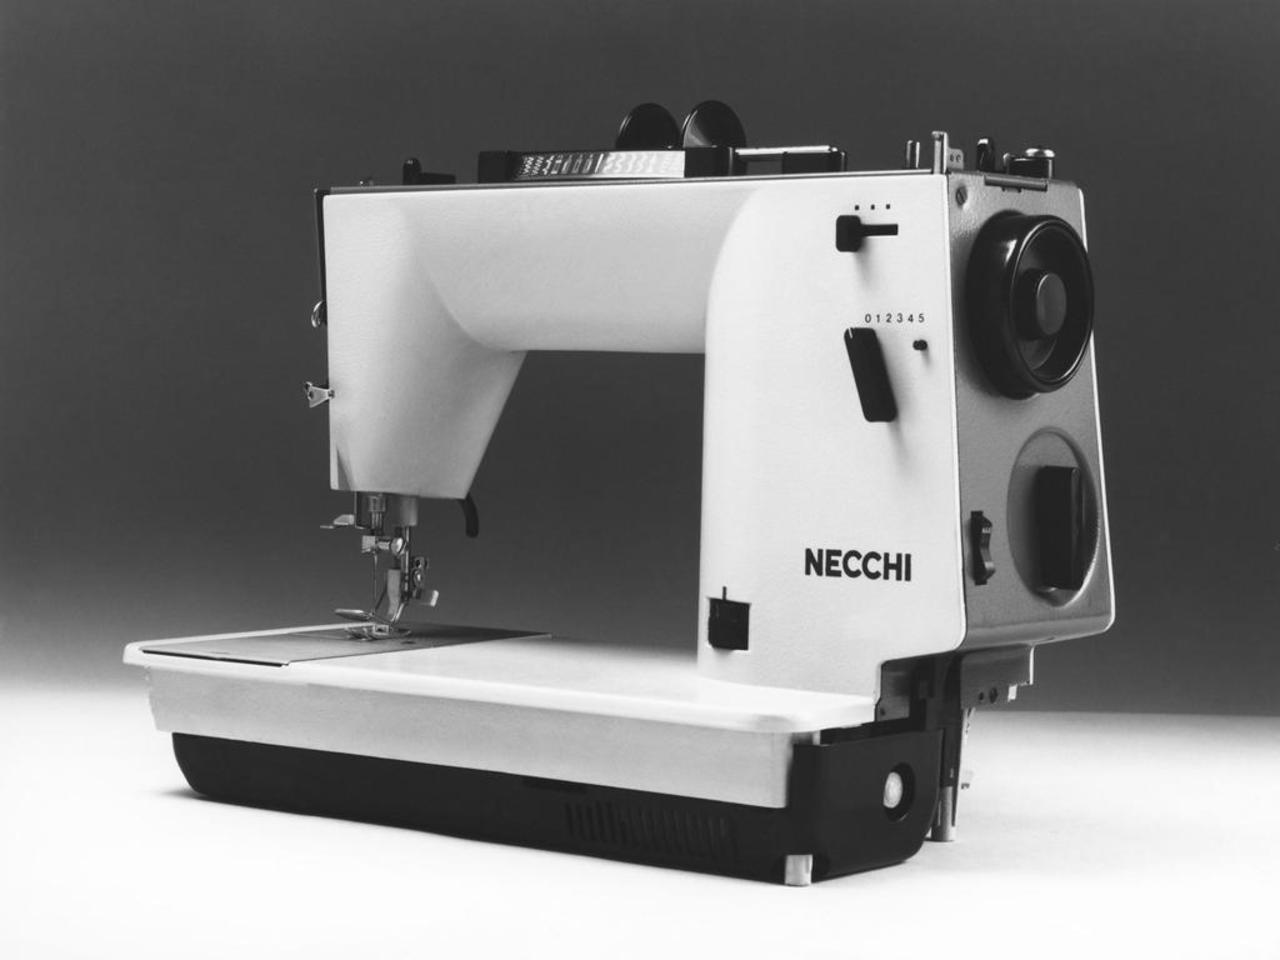 Necchi 564 sewing machine